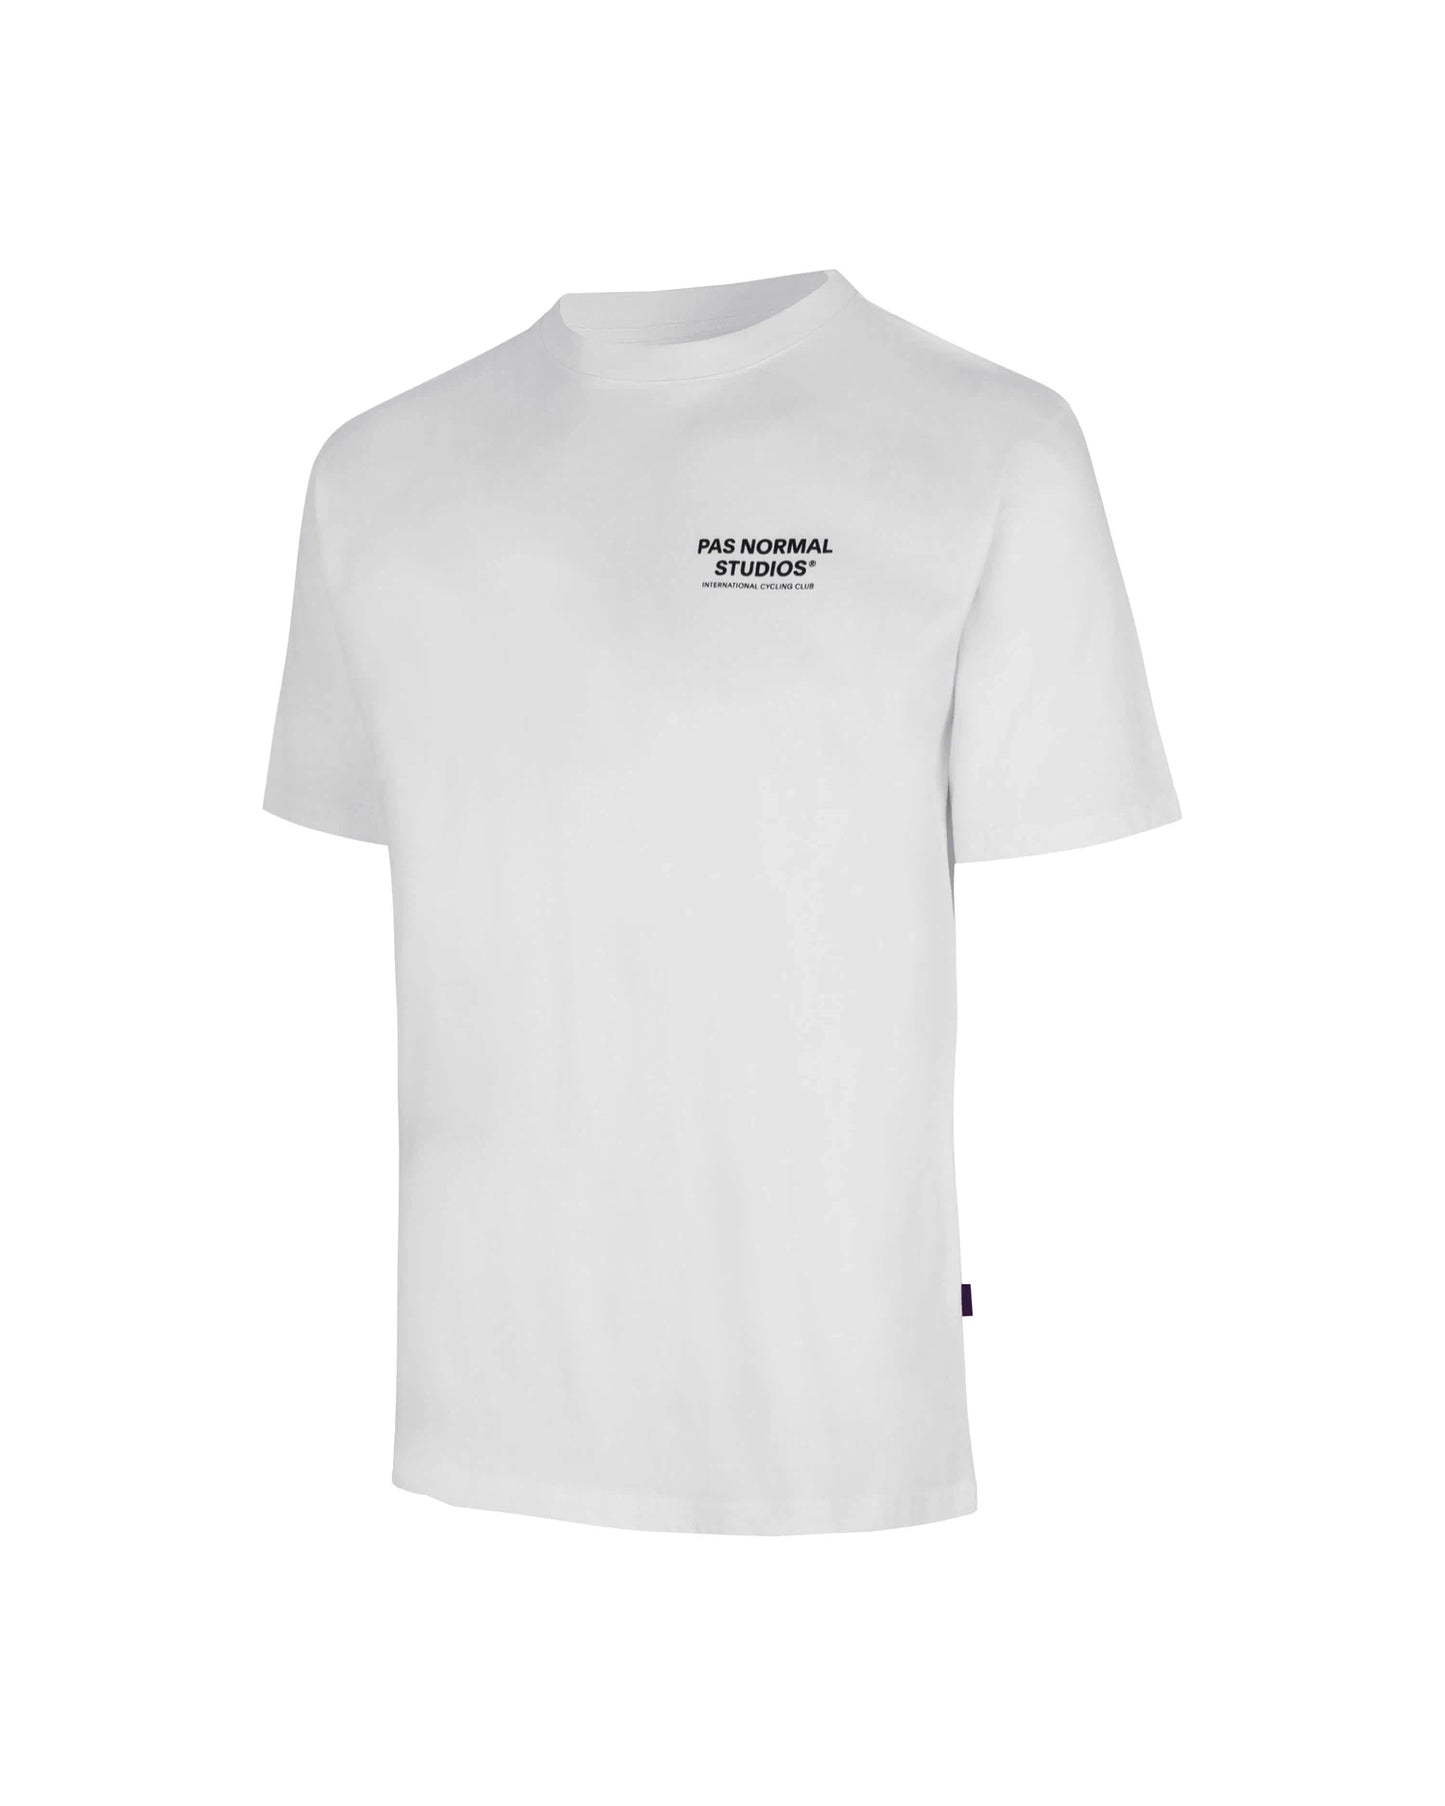 PAS NORMAL STUDIOS Off Race Small Logo Tshirt Short Sleeve - White/Black